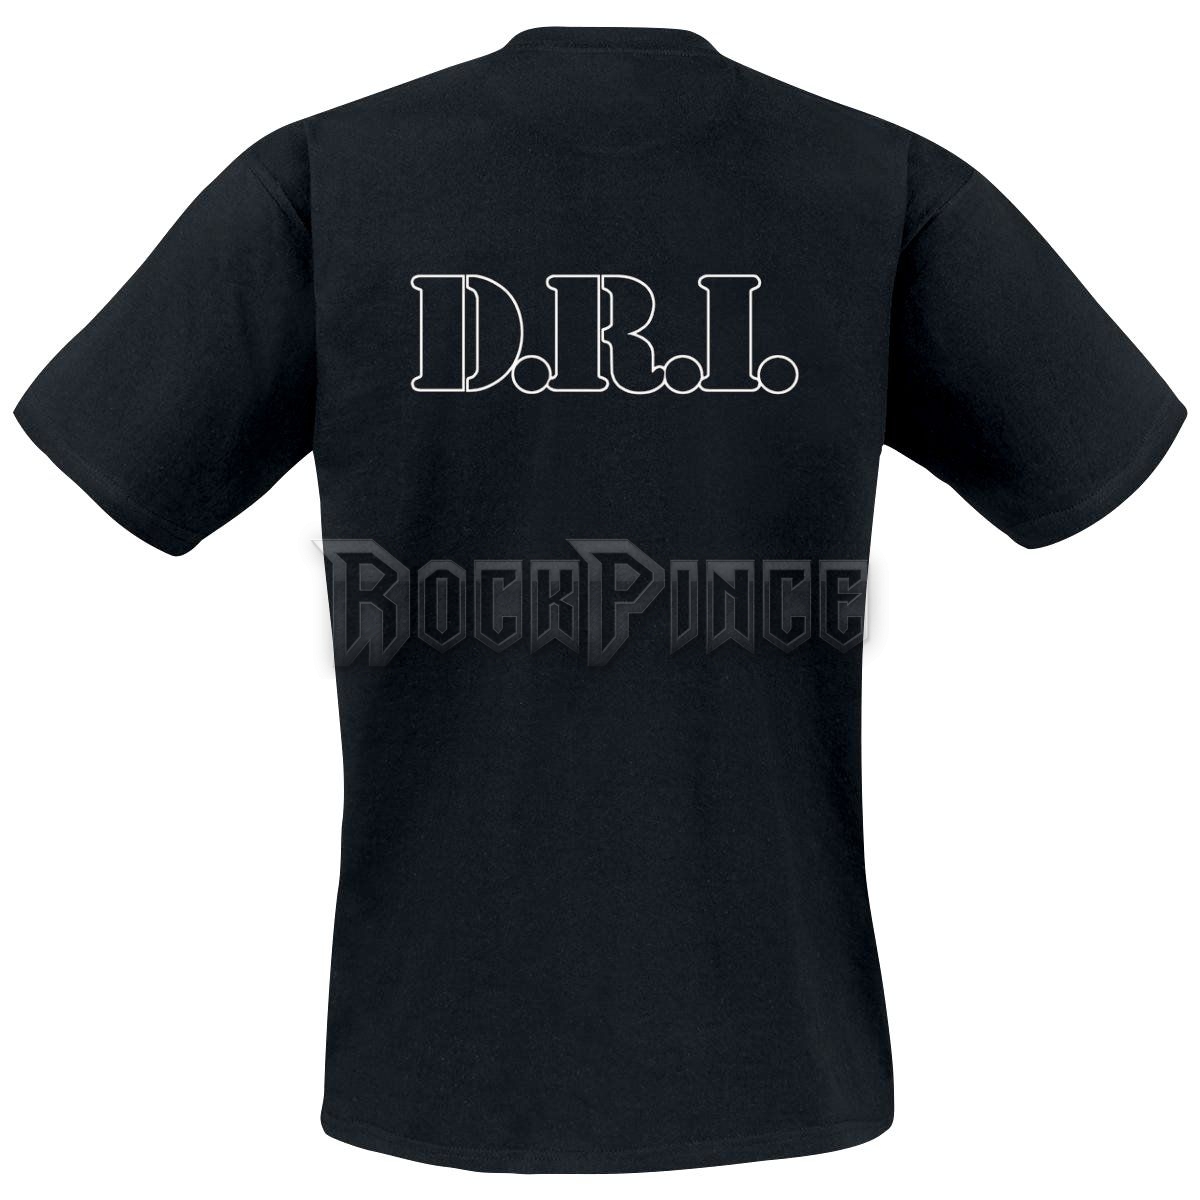 D.R.I. - Dirty Rotten Imbeciles - 1396 - UNISEX PÓLÓ